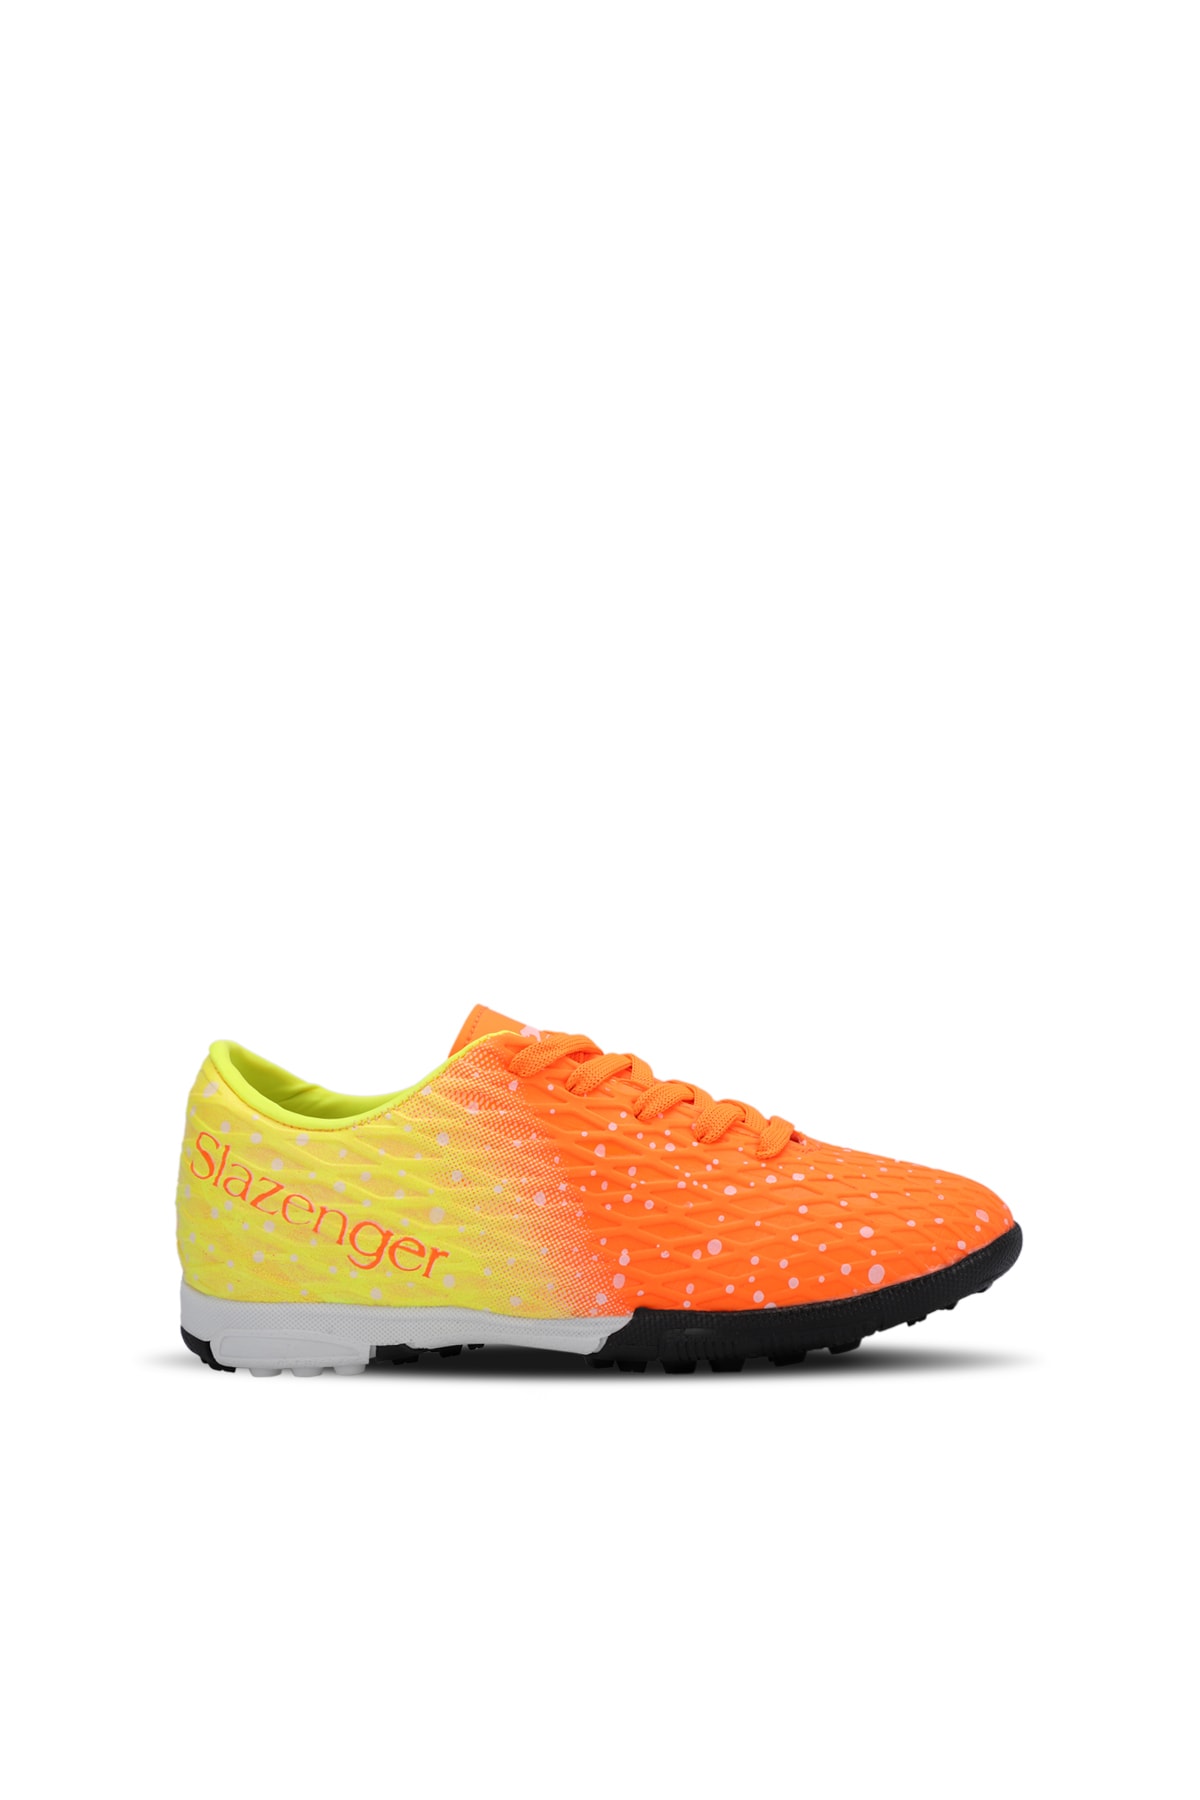 Slazenger Hania Hs Football Boys Football Field Shoes Orange.